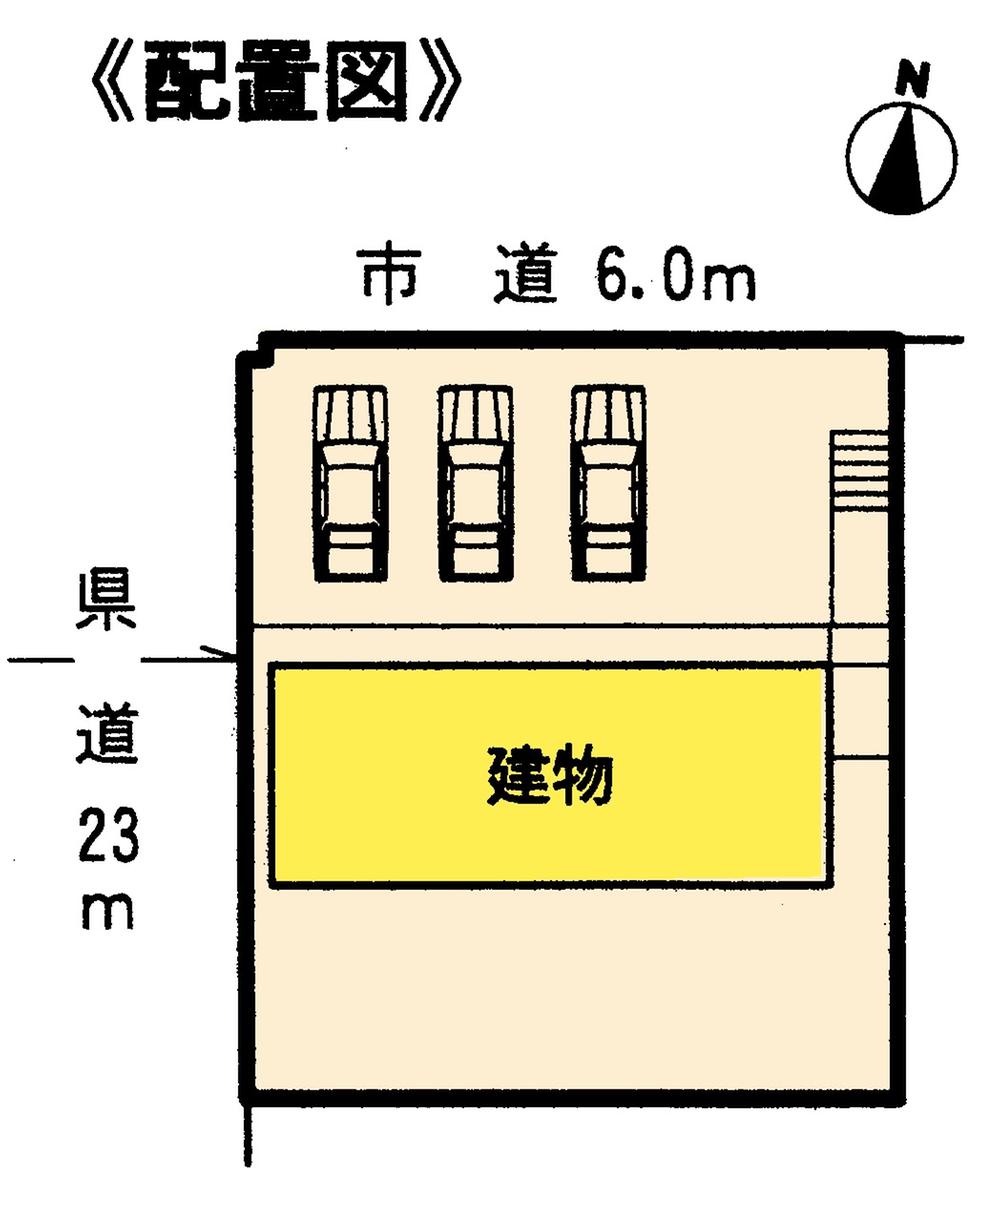 Compartment figure. 20,900,000 yen, 4LDK, Land area 221.9 sq m , Building area 98.55 sq m compartment view Parallel three parking possible! 